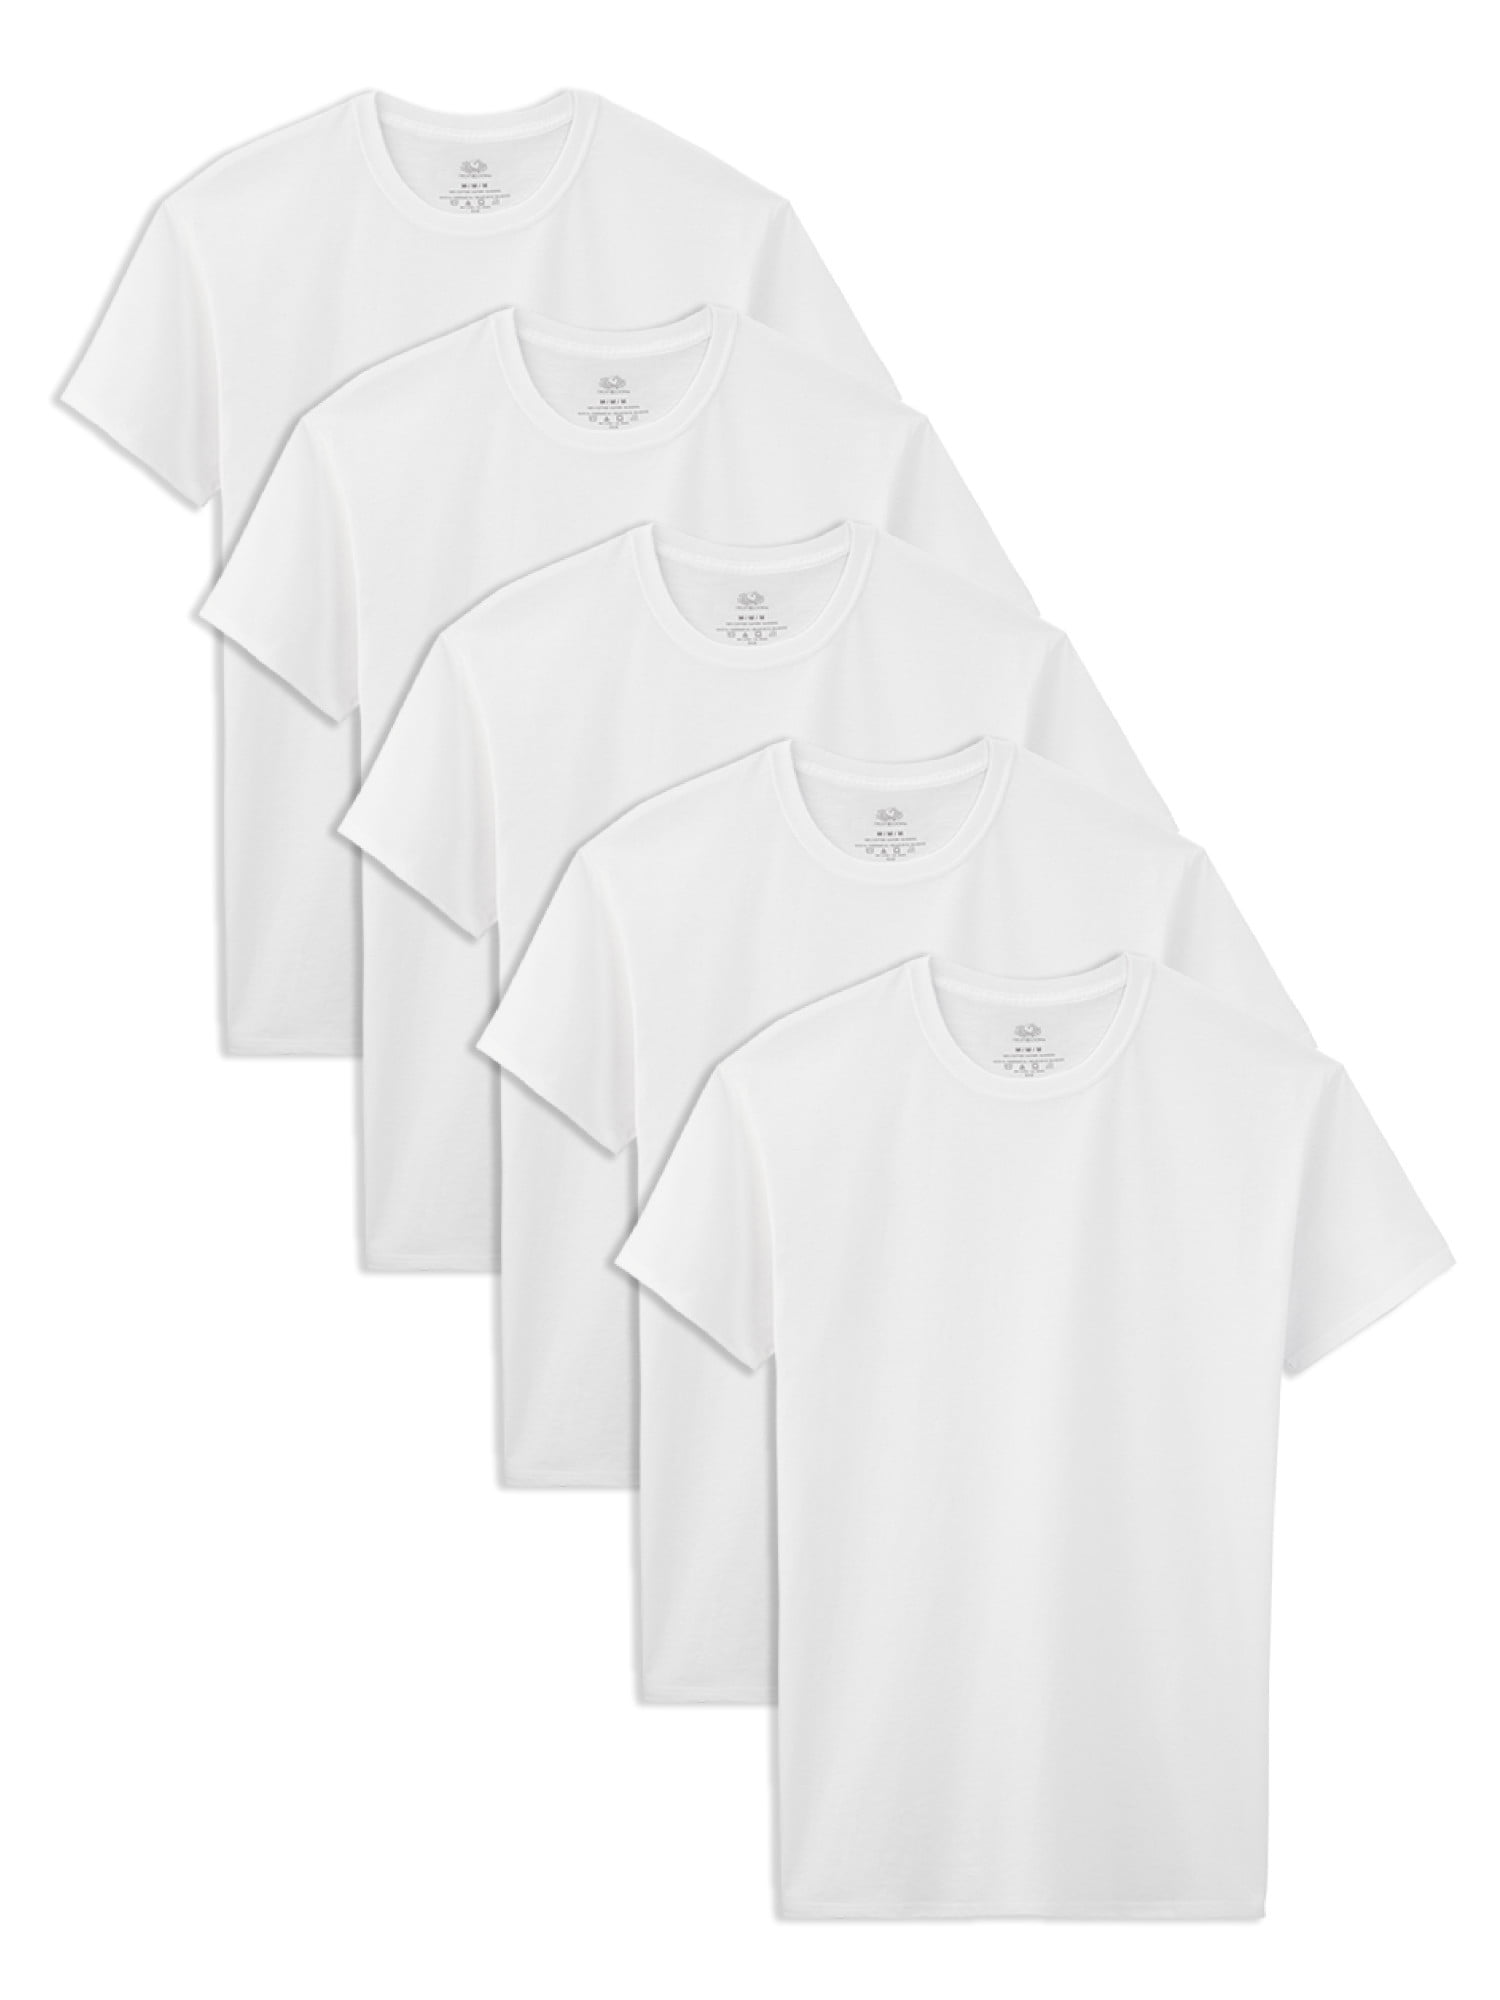 Details about   New White Cotton T-Shirt & Nikar Set For Boys 